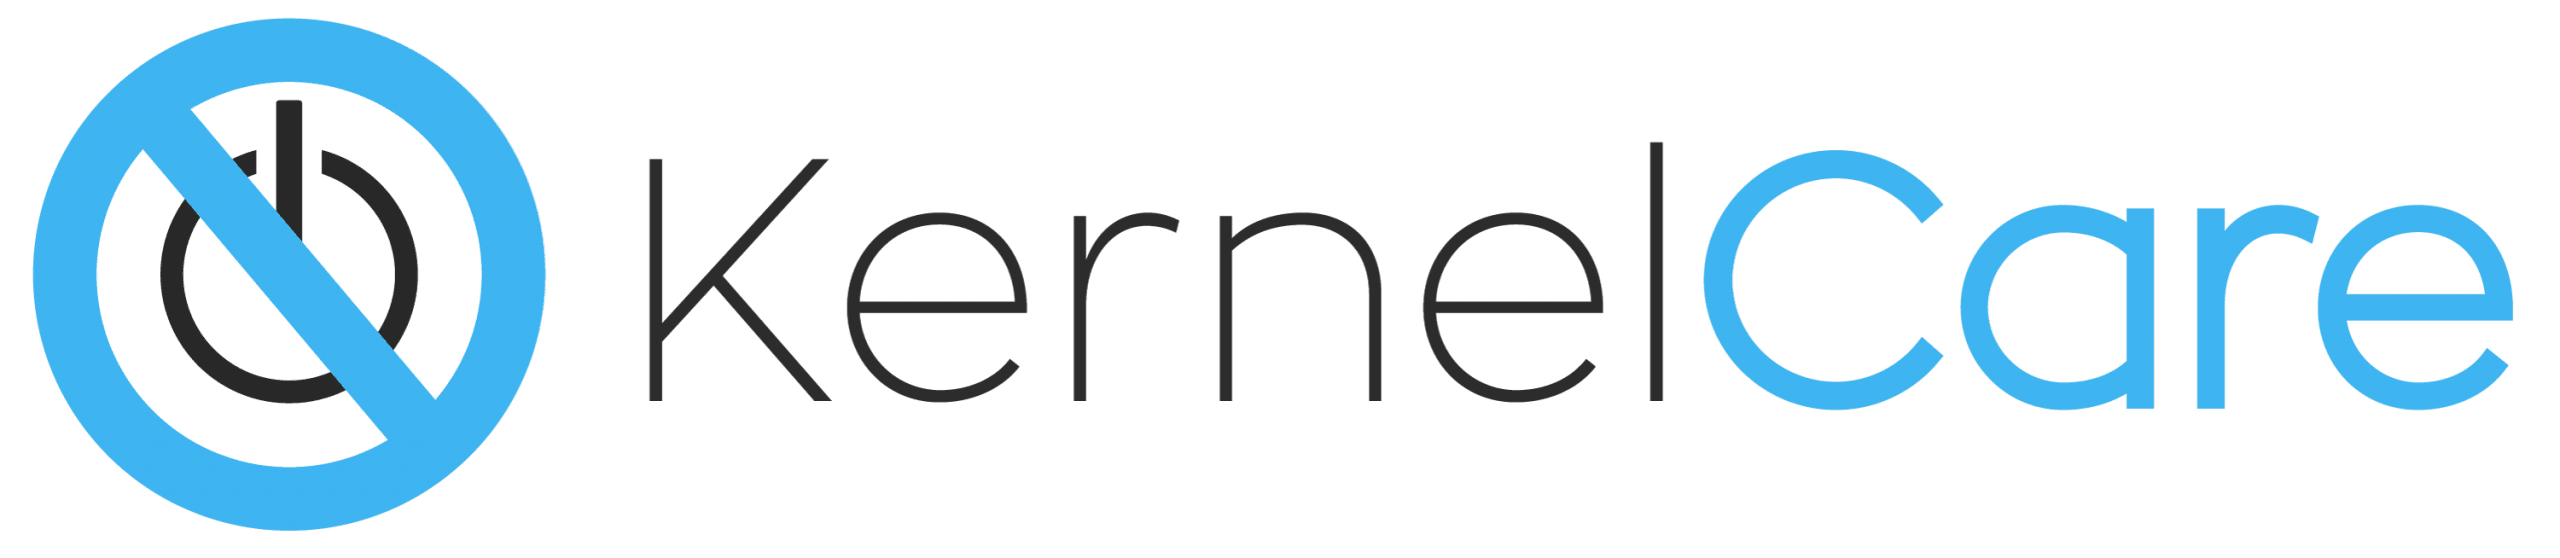 KernelCare logo